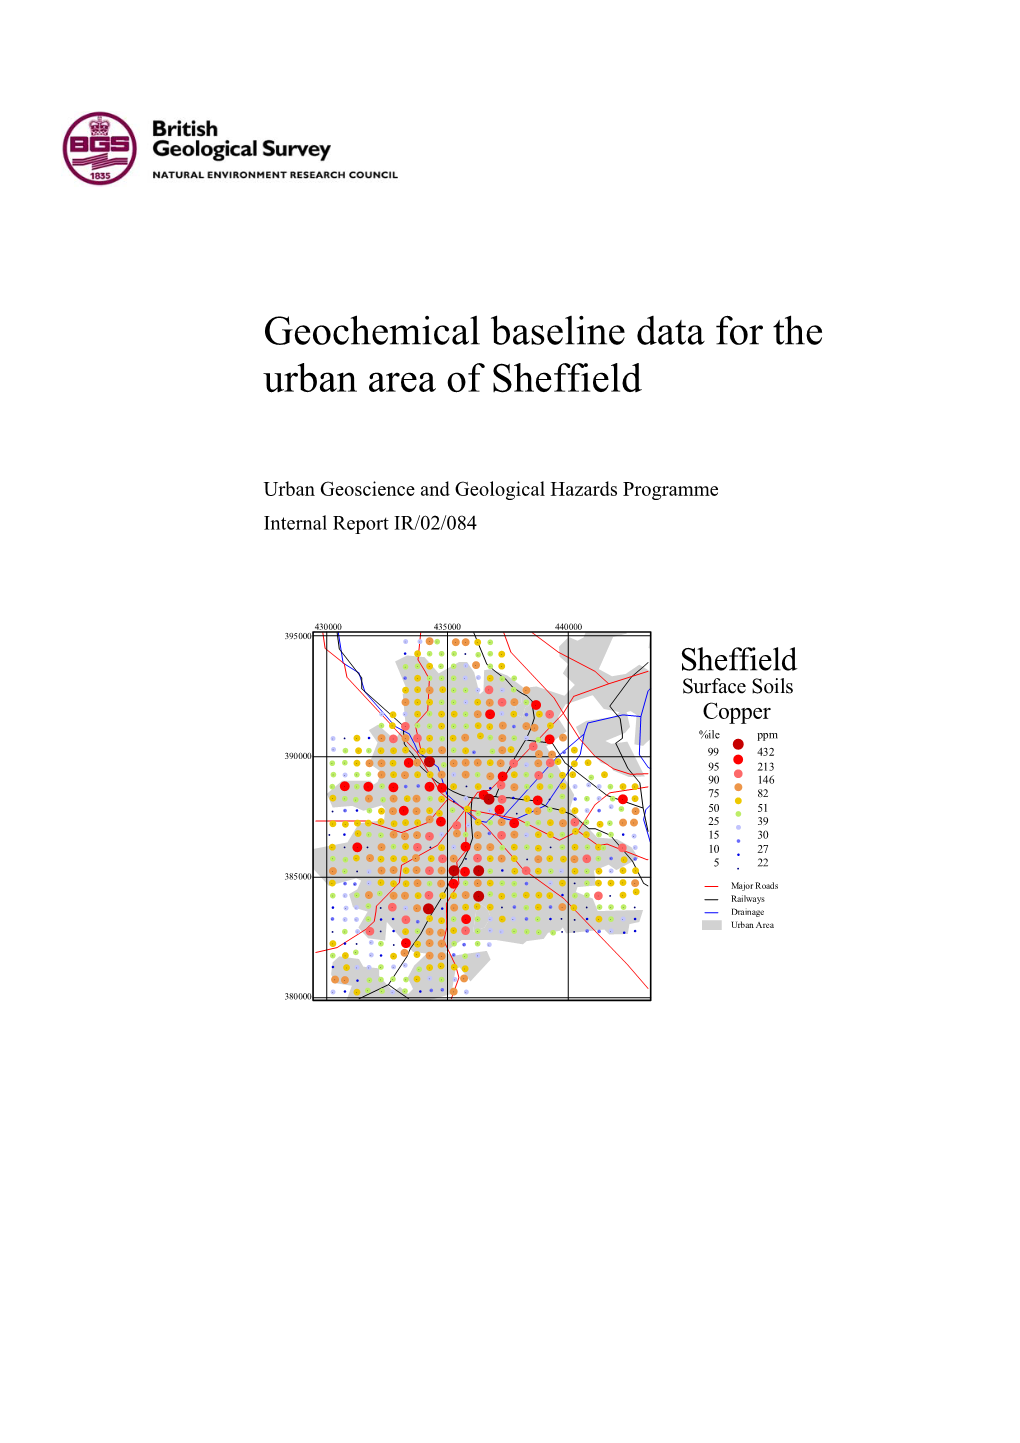 Geochemical Baseline Data for the Urban Area of Sheffield